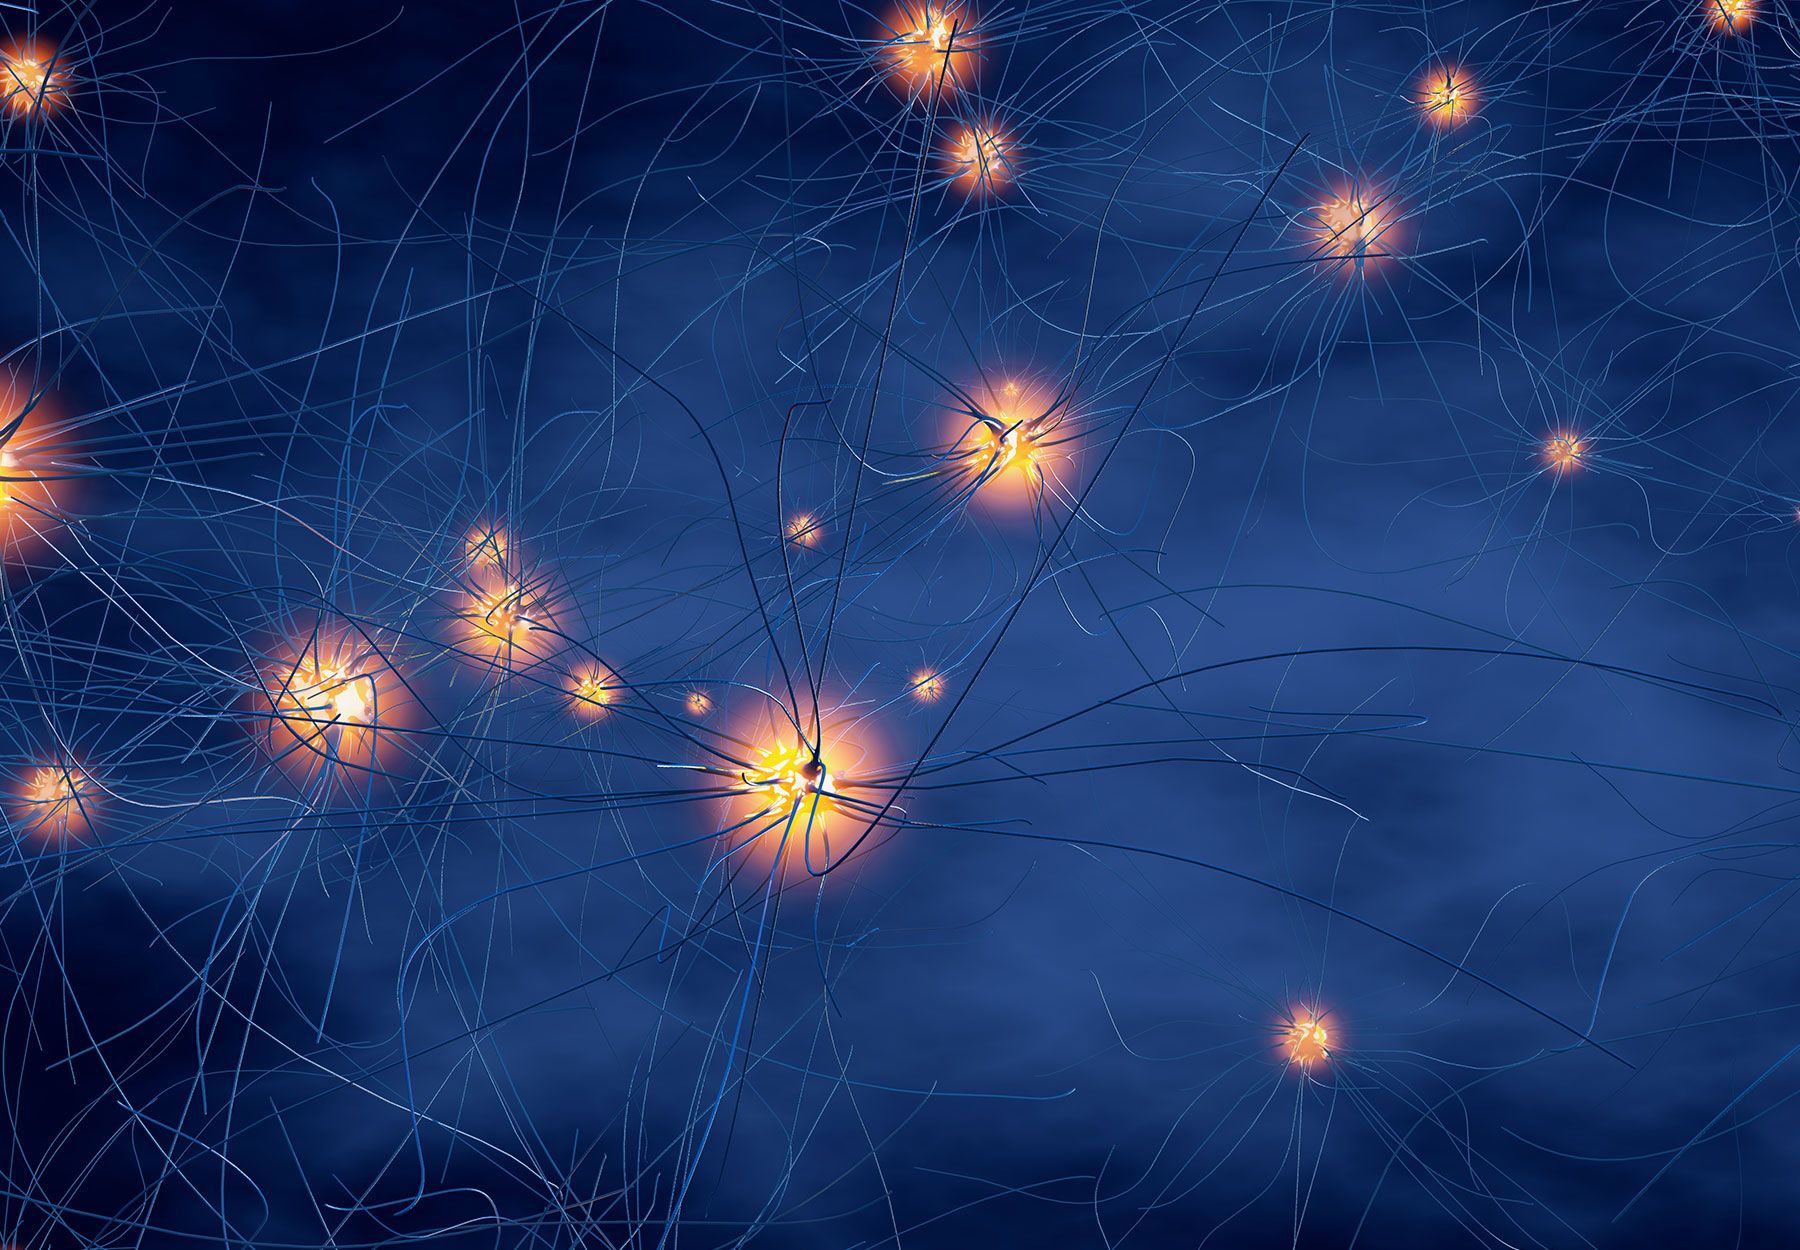 3d illustration of transmitting synapse, neuron, or nerve cell. Neurology concept. Orange synapses. Dark blue background. Stock image.